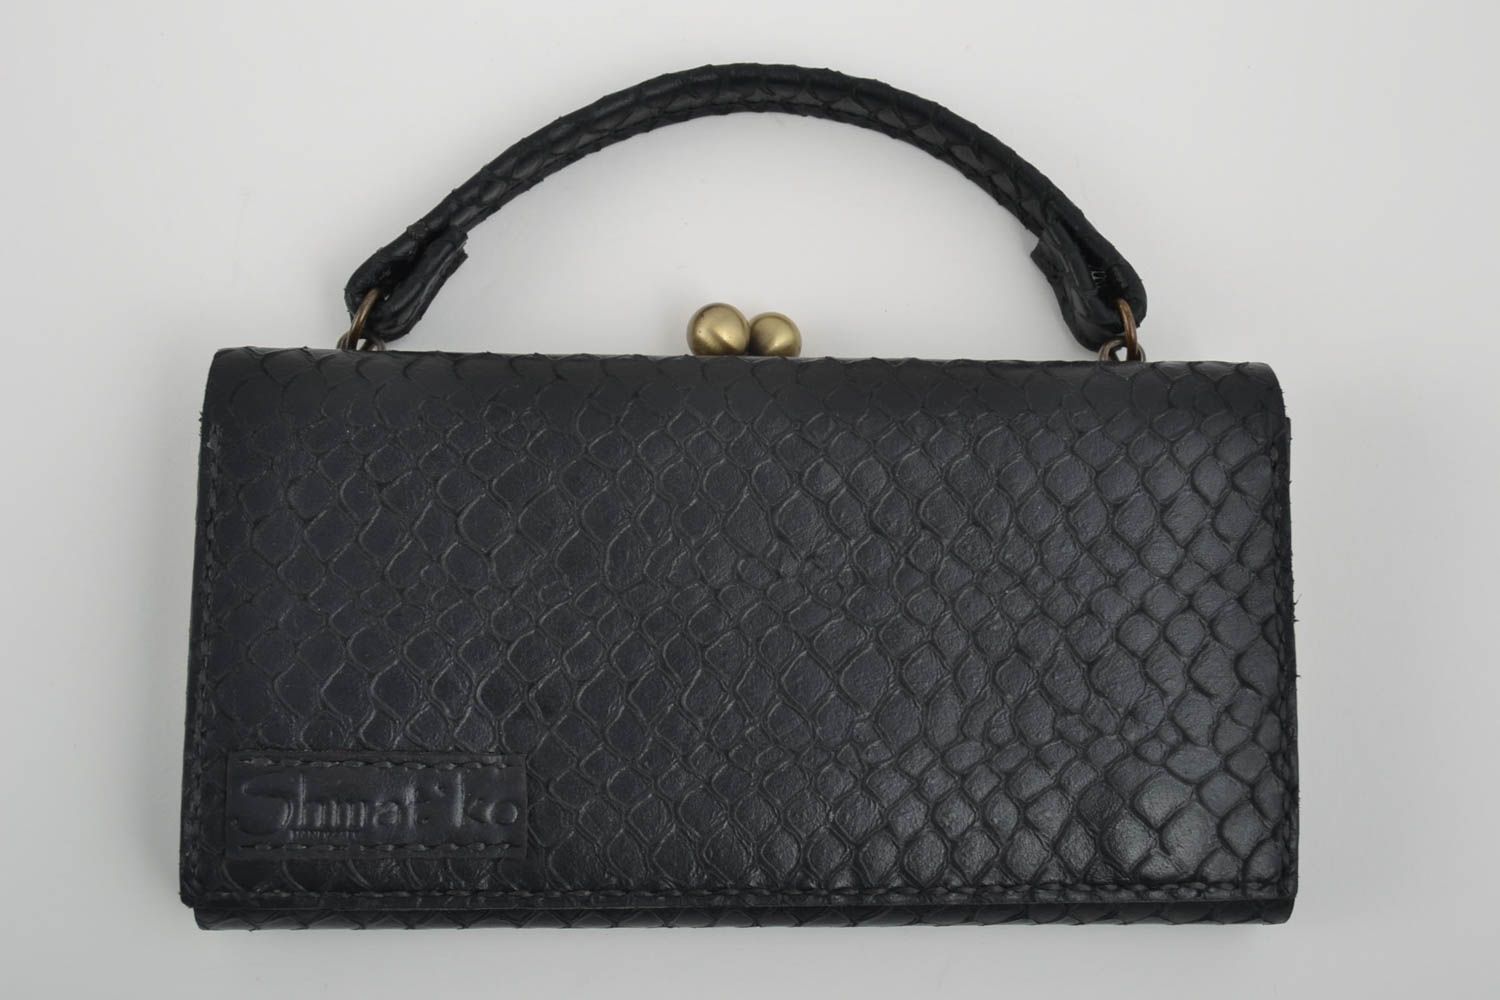 Beautiful handmade leather clutch bag designer handbag leather goods for girls photo 2